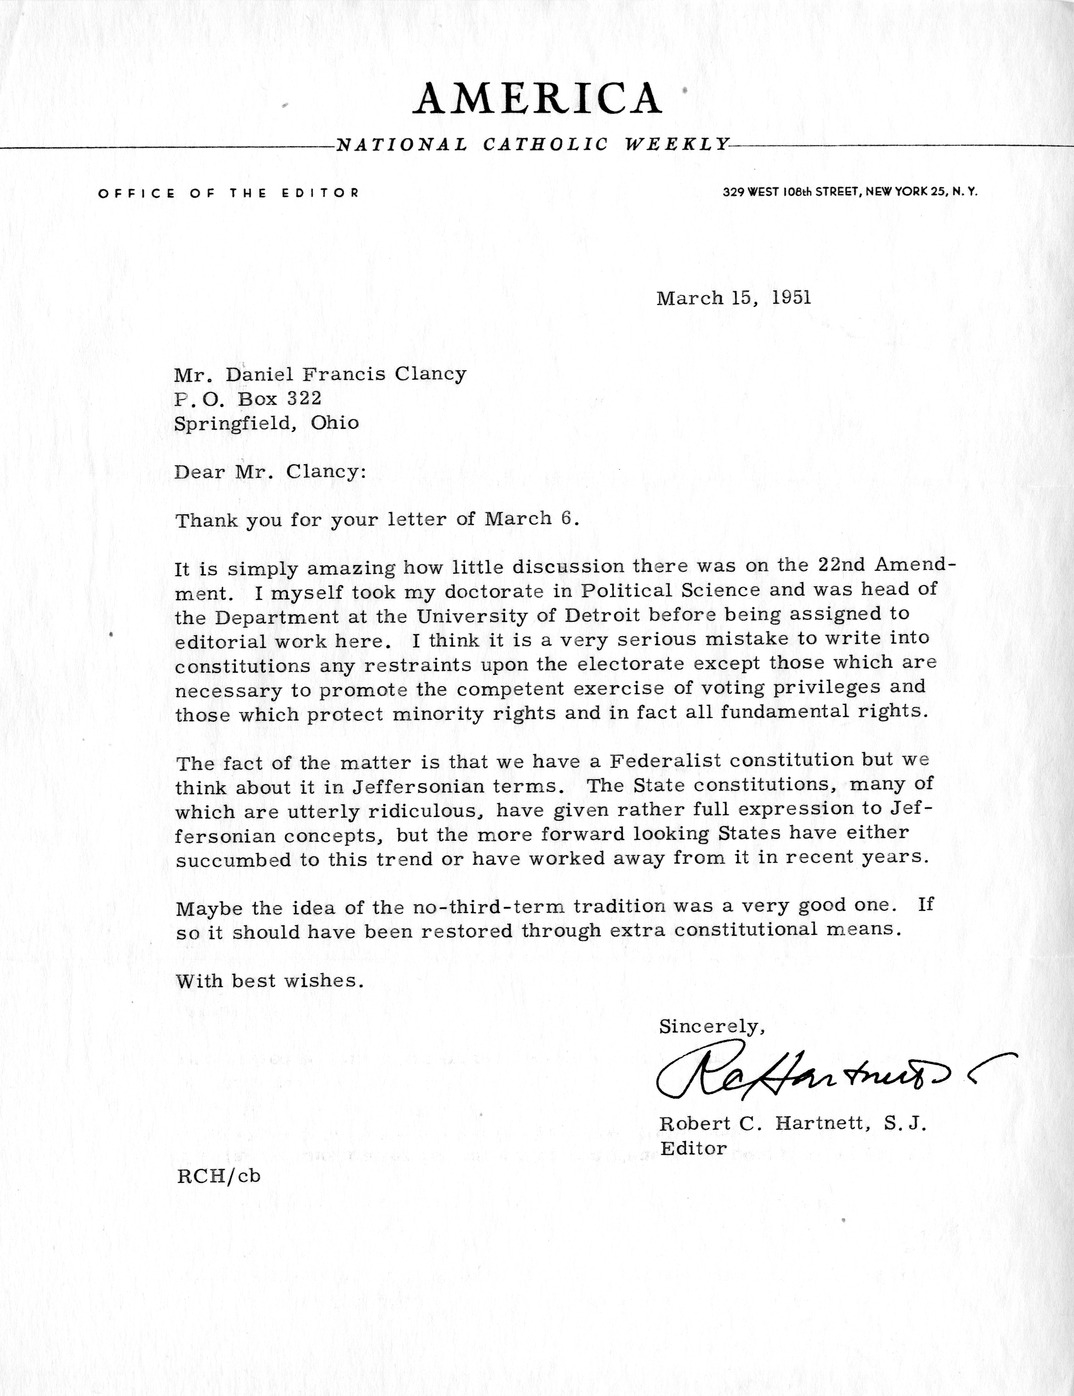 Letter from Robert C. Hartnett, S.J. to Daniel F. Clancy